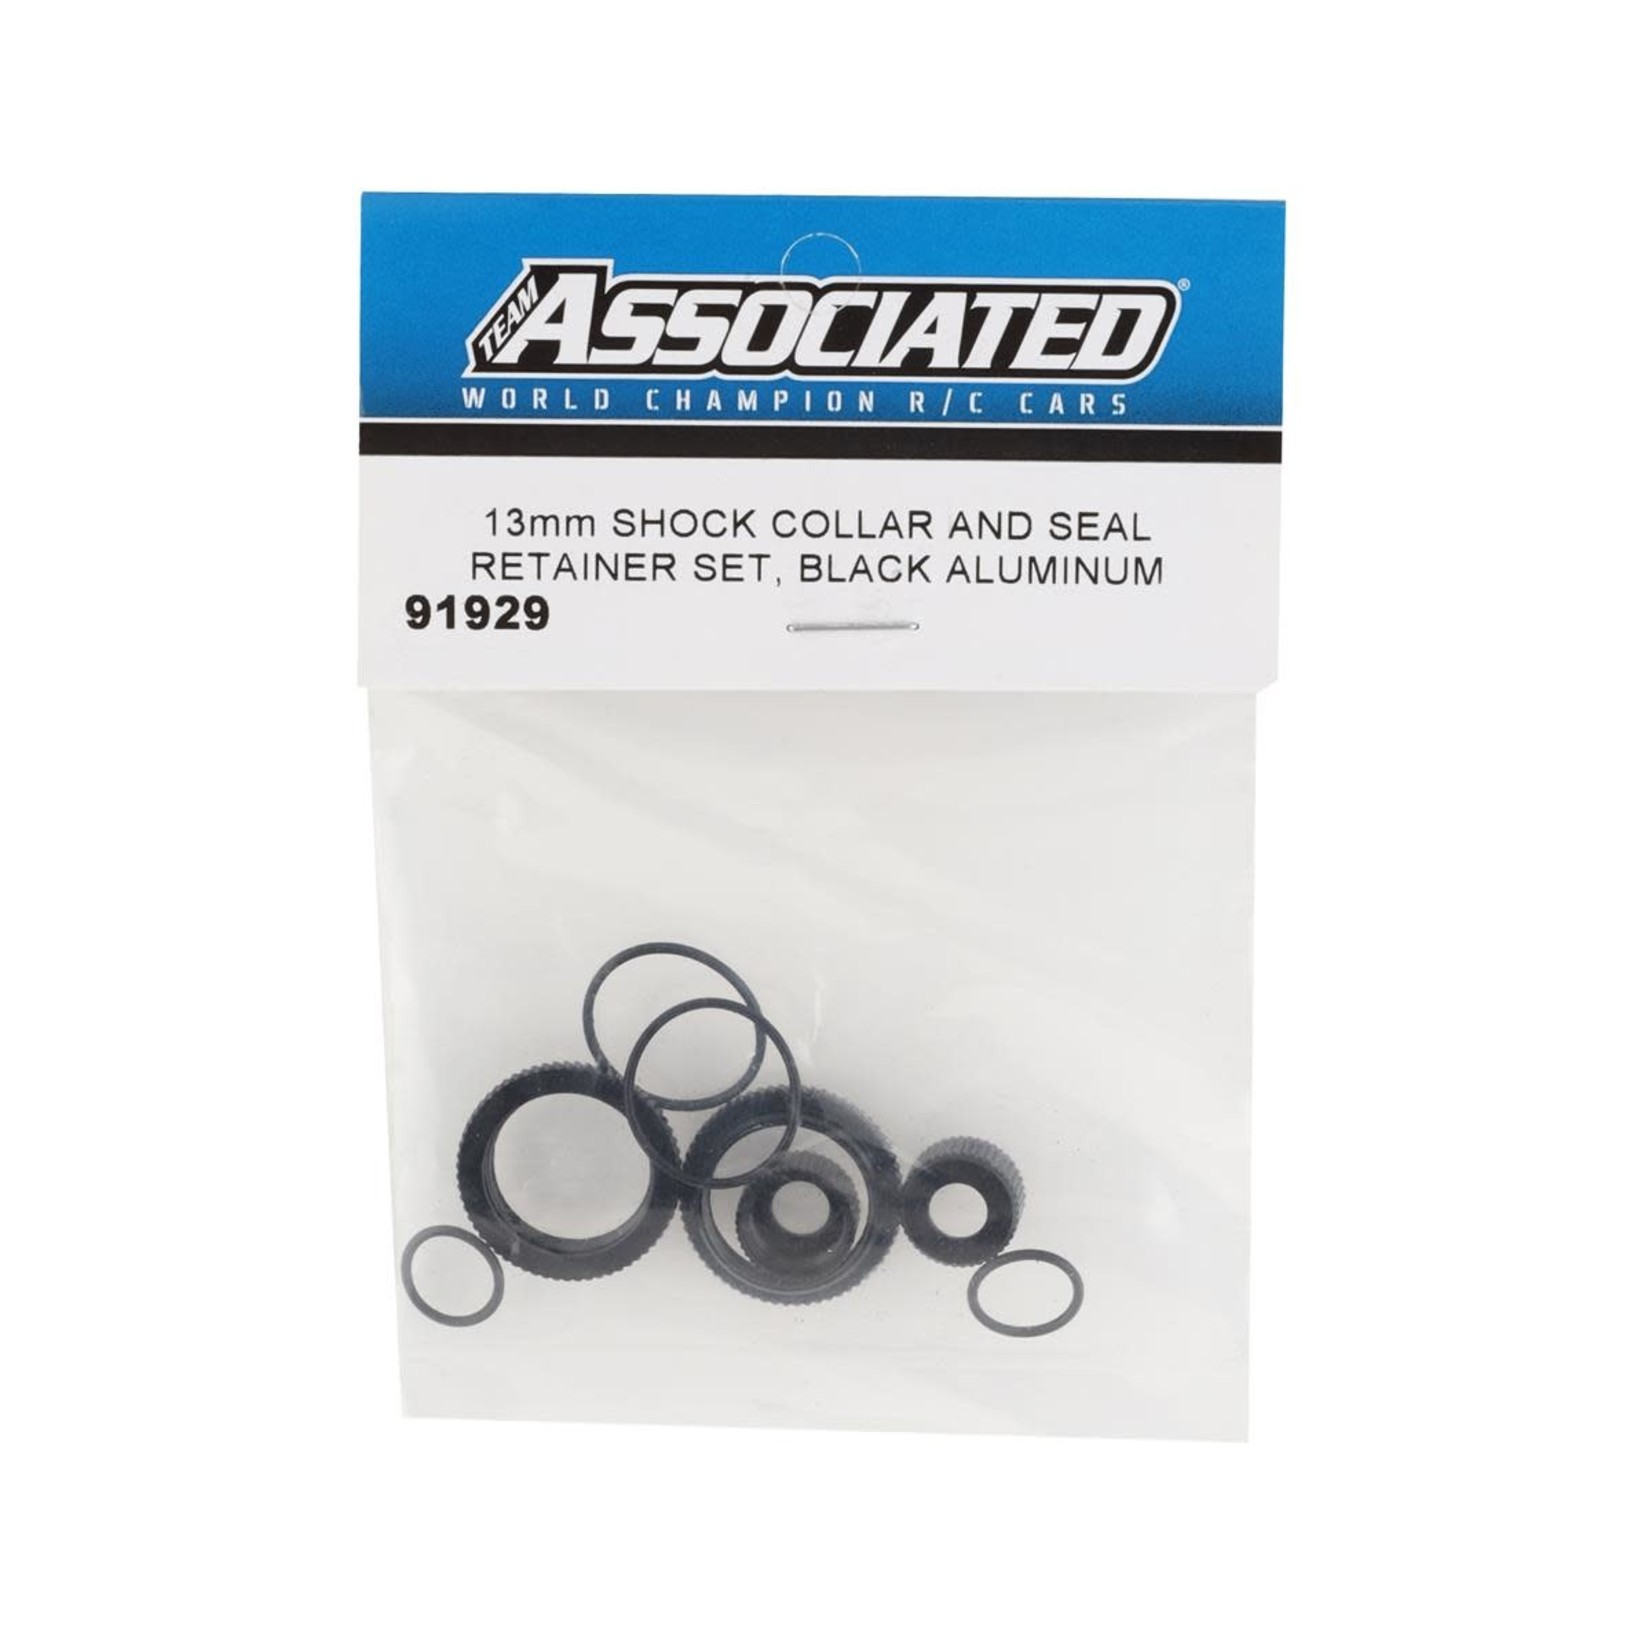 Team Associated Team Associated 13mm Shock Collar & Seal Retainer Set (Black) #91929